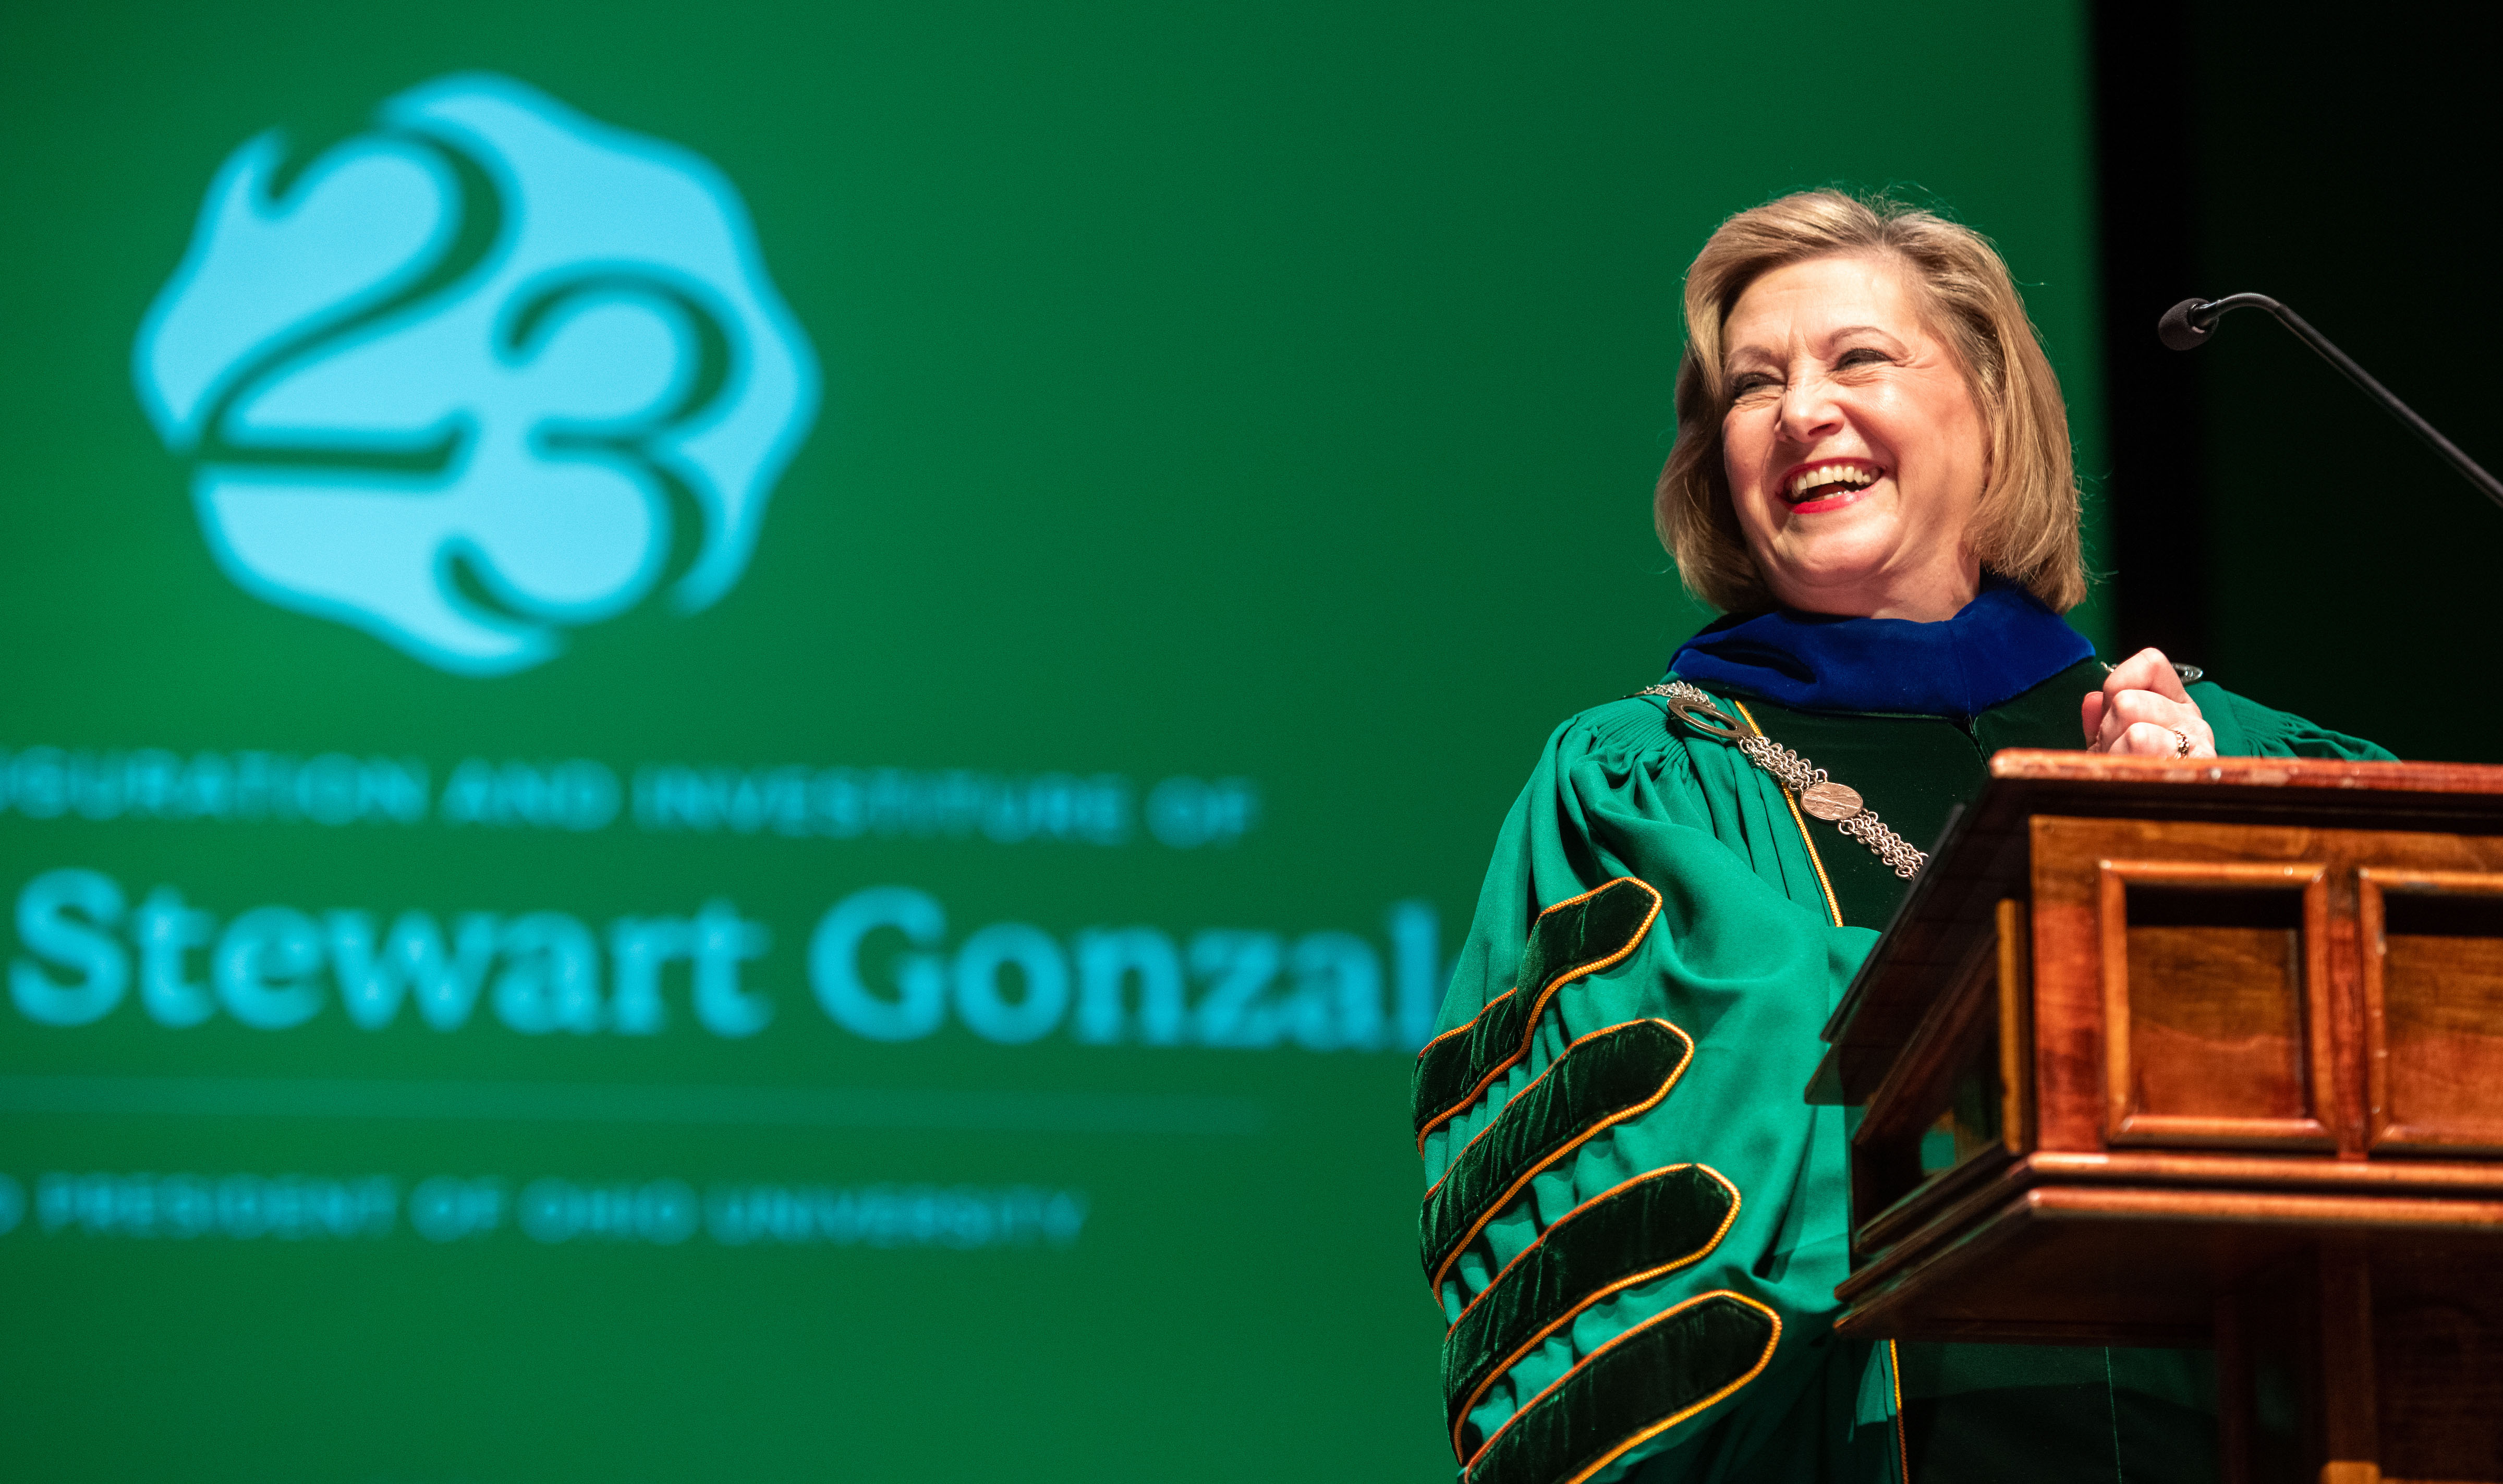 An image of President Lori Stewart Gonzalez